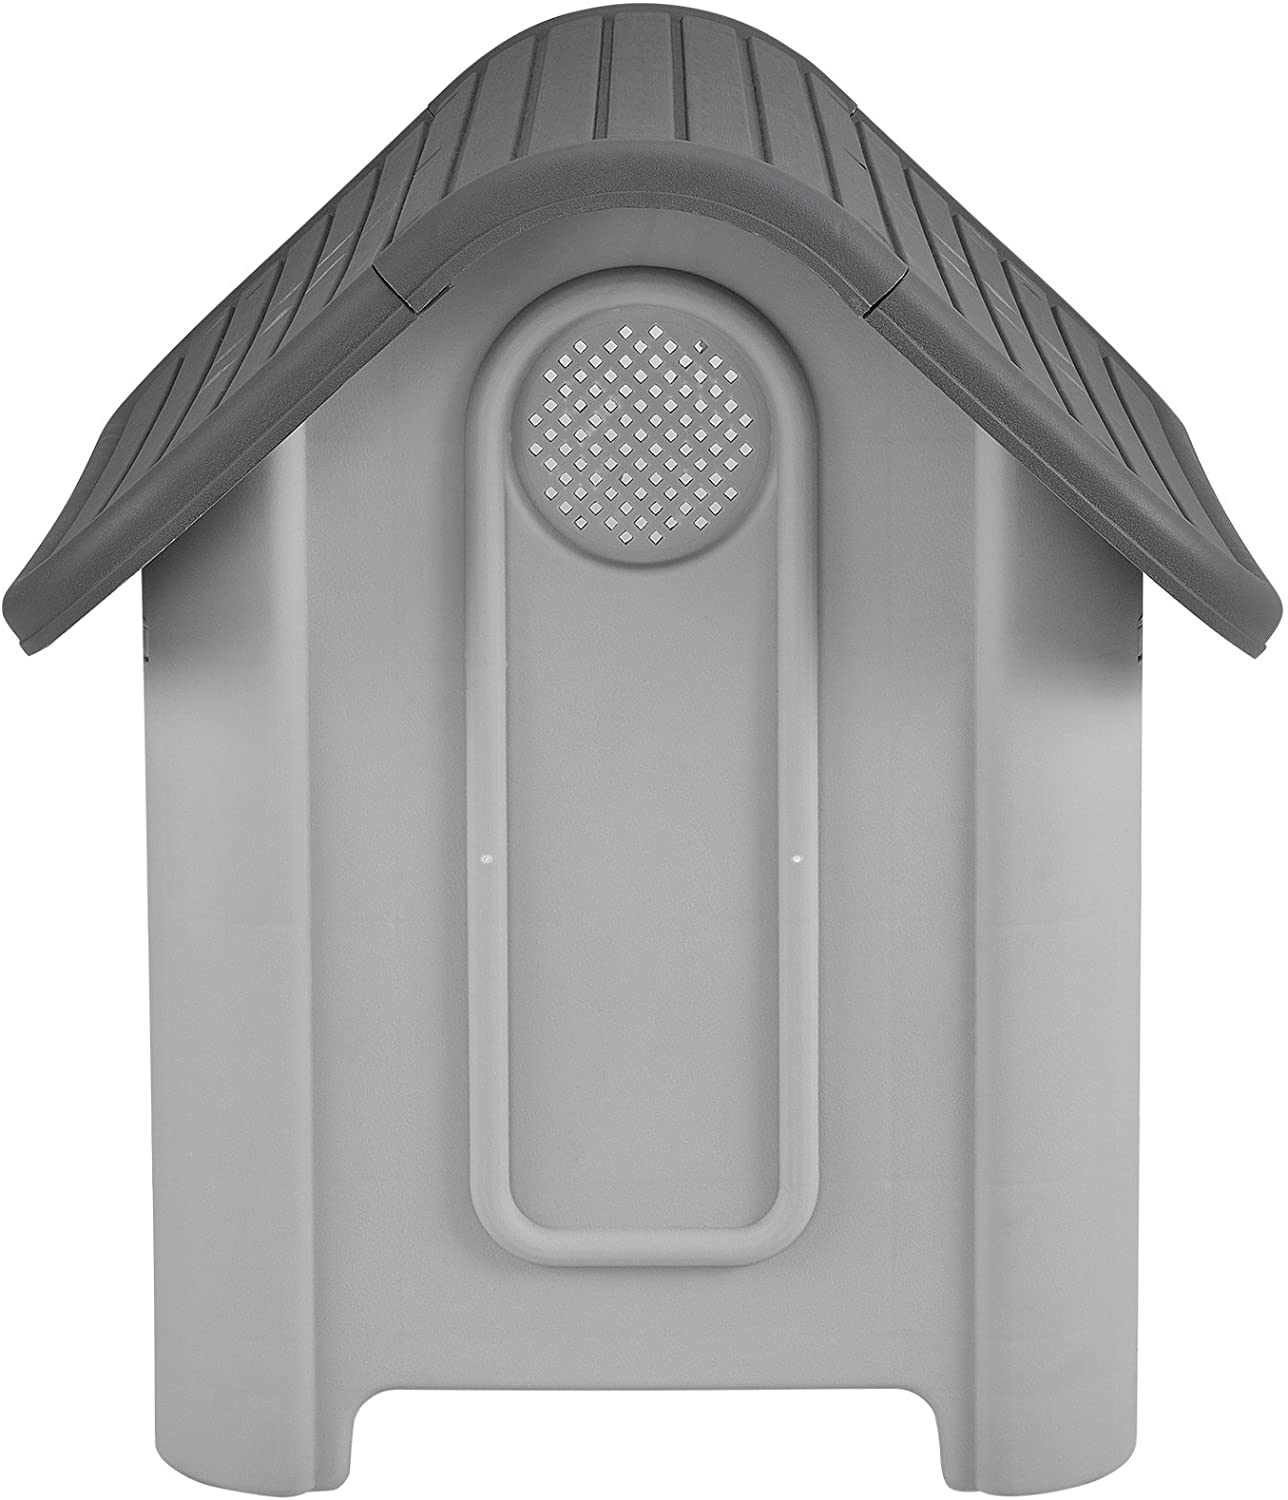  [en.casa] Caseta de plástico para Perros - gris / negro - PVC - 75 x 59 x 66 cm 